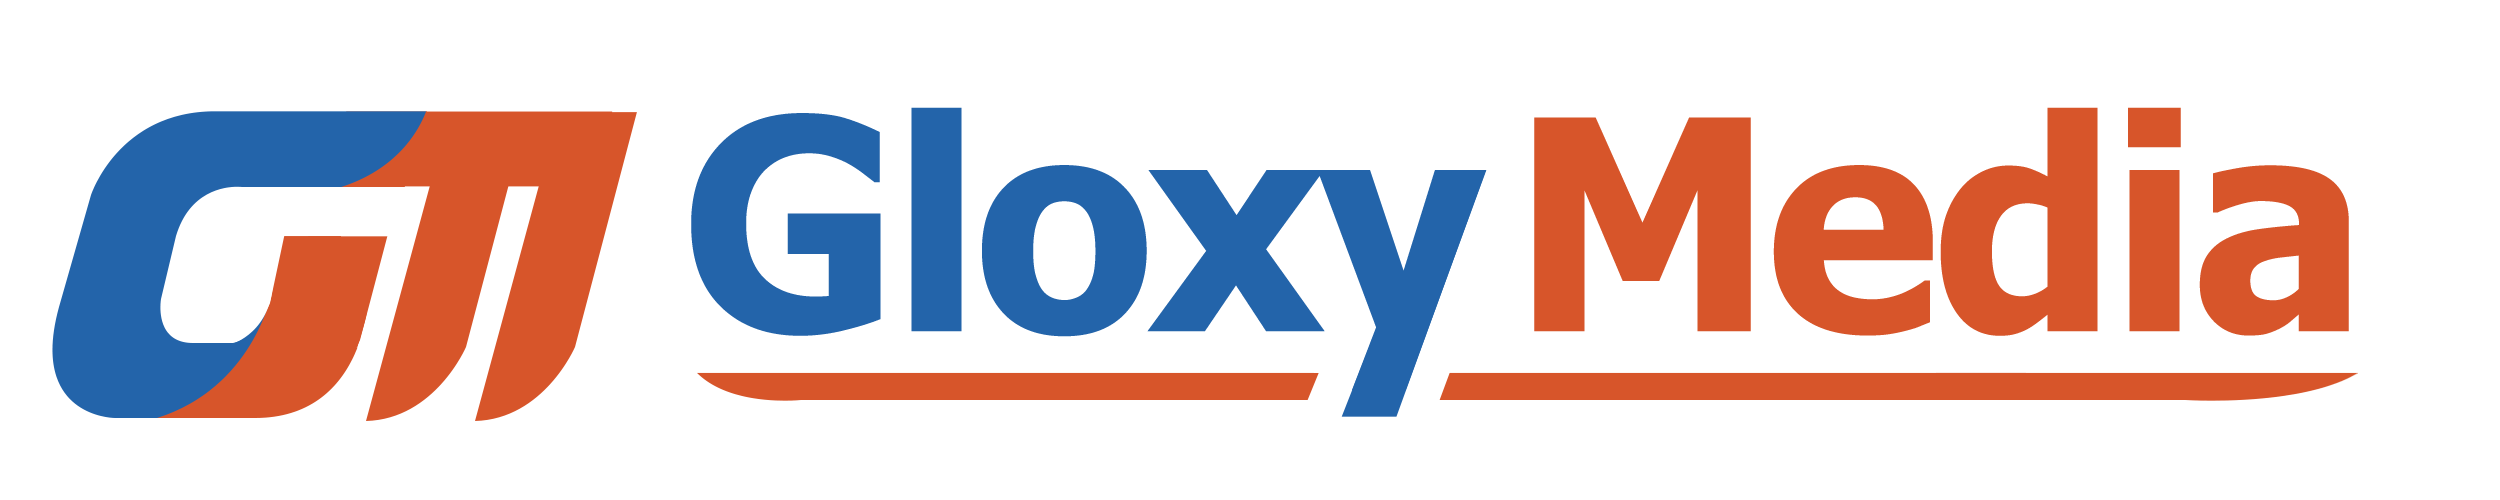 Gloxy Media Cyber